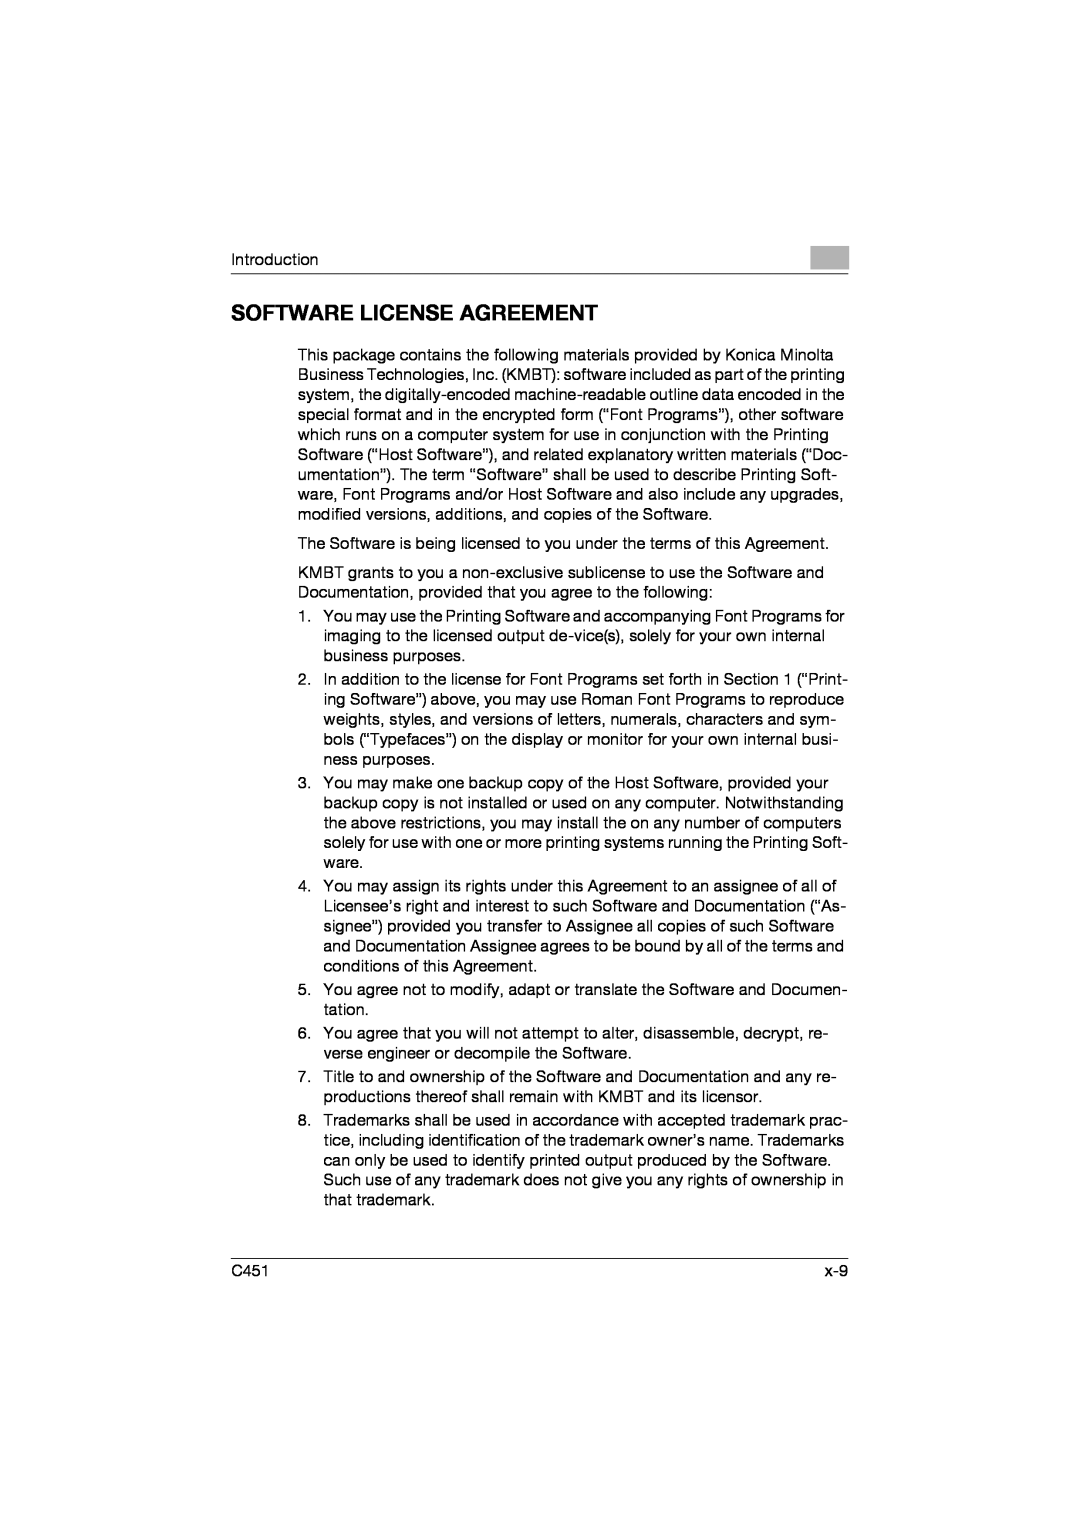 Konica Minolta C451 manual Software License Agreement 